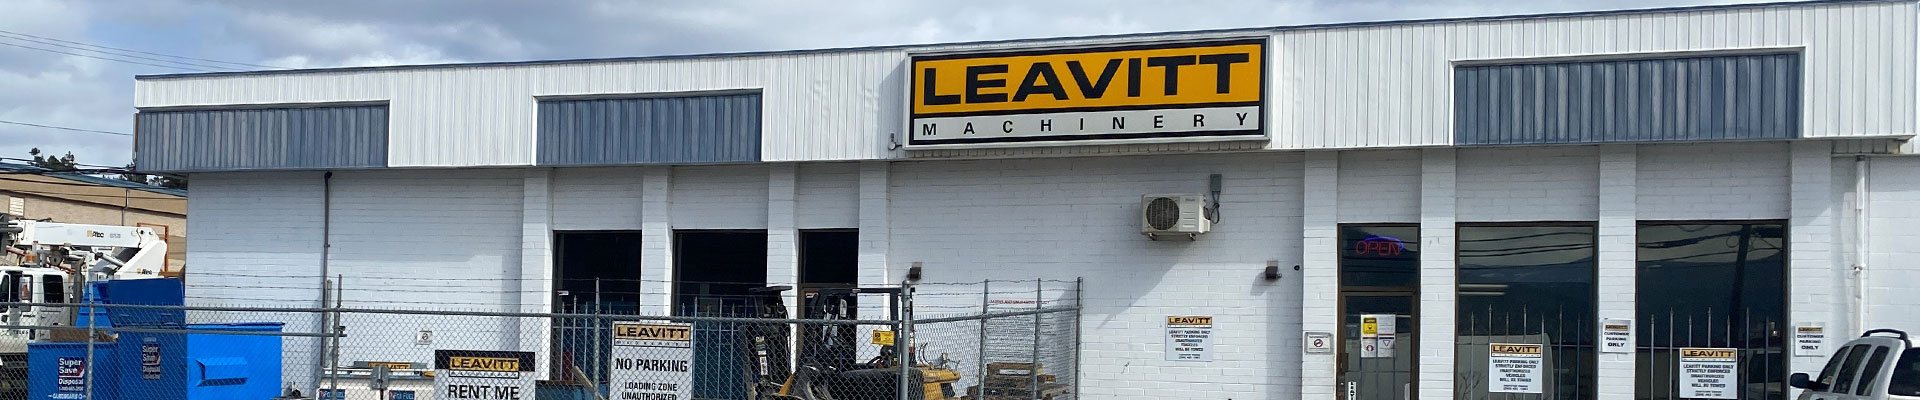 Leavitt Machinery Penticton branch